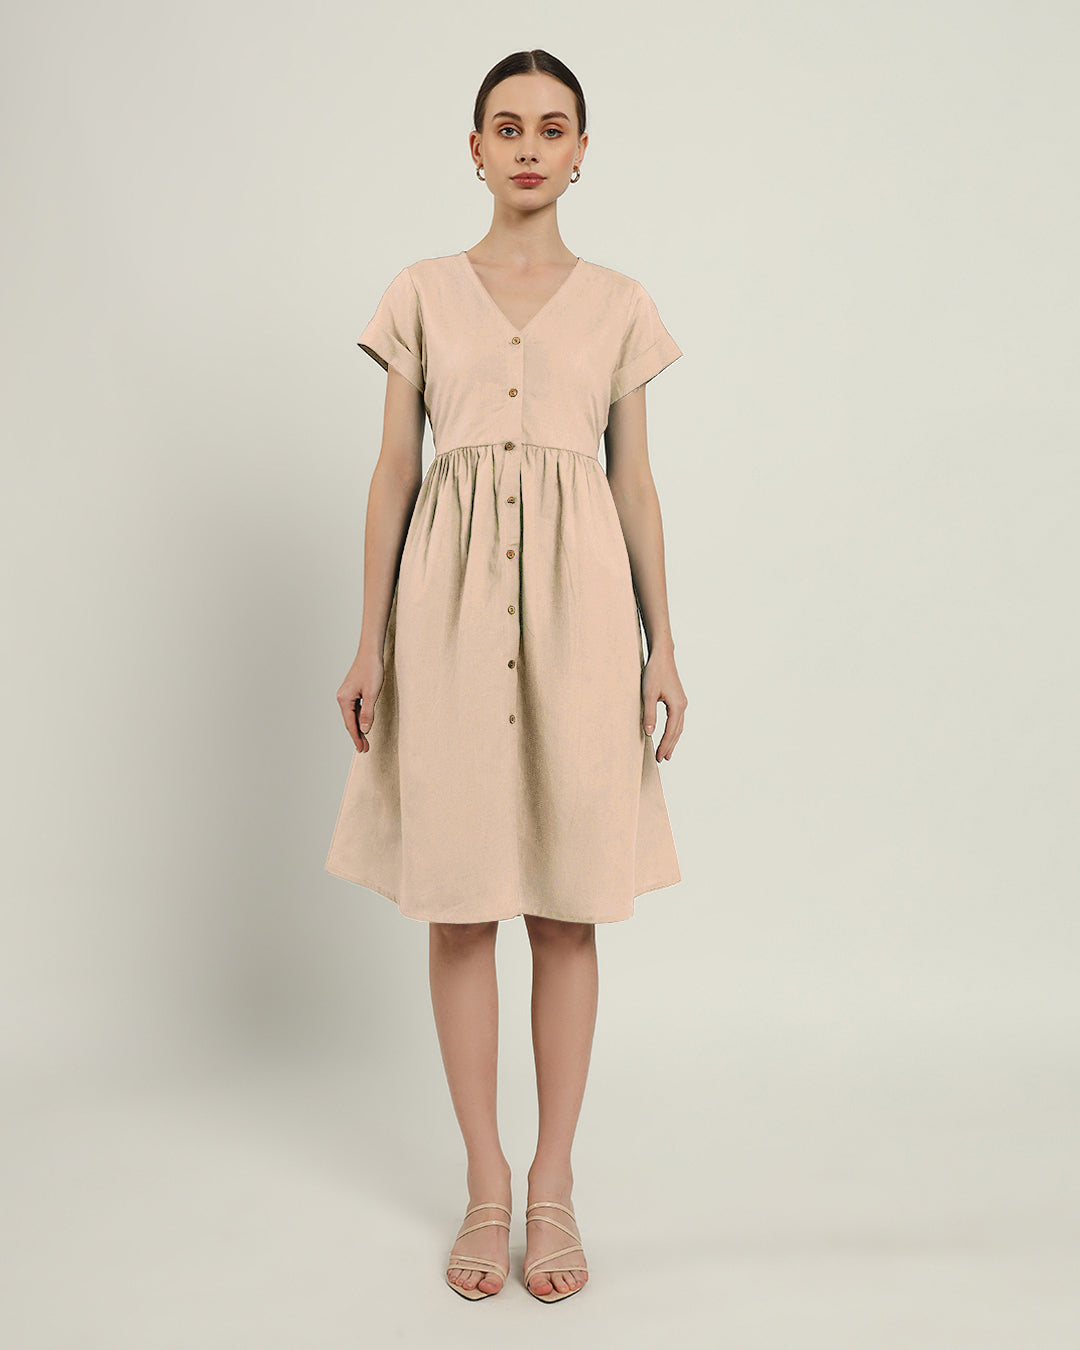 The Valence Daisy Bisque Linen Dress